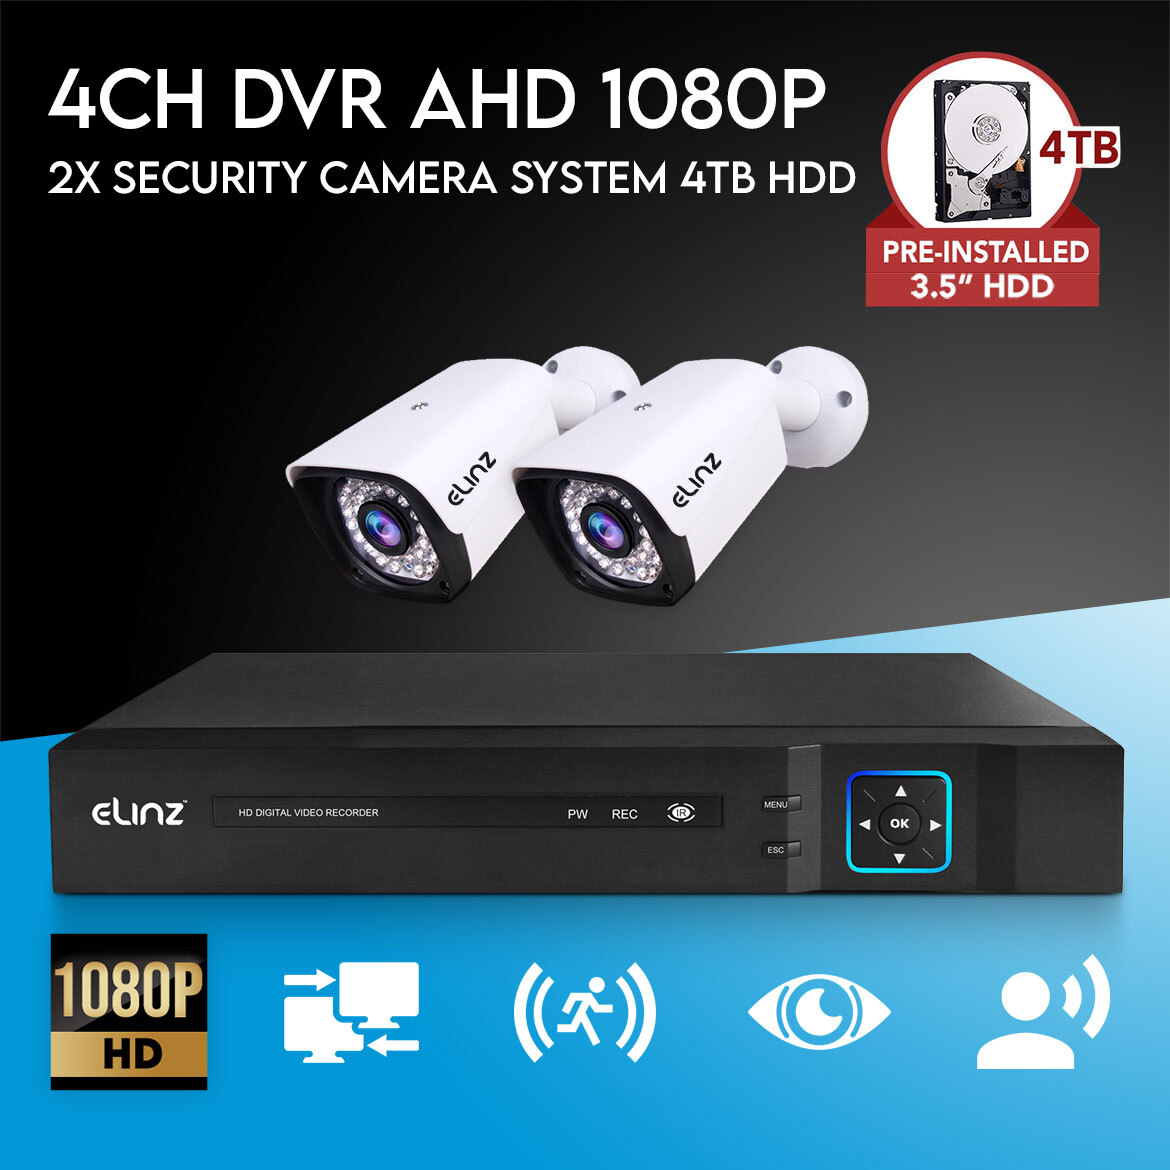 Elinz 4CH DVR AHD 1080P HD CCTV 2x Outdoor Bullet Security Camera System Surveillance Video & Audio Recording 4TB HDD